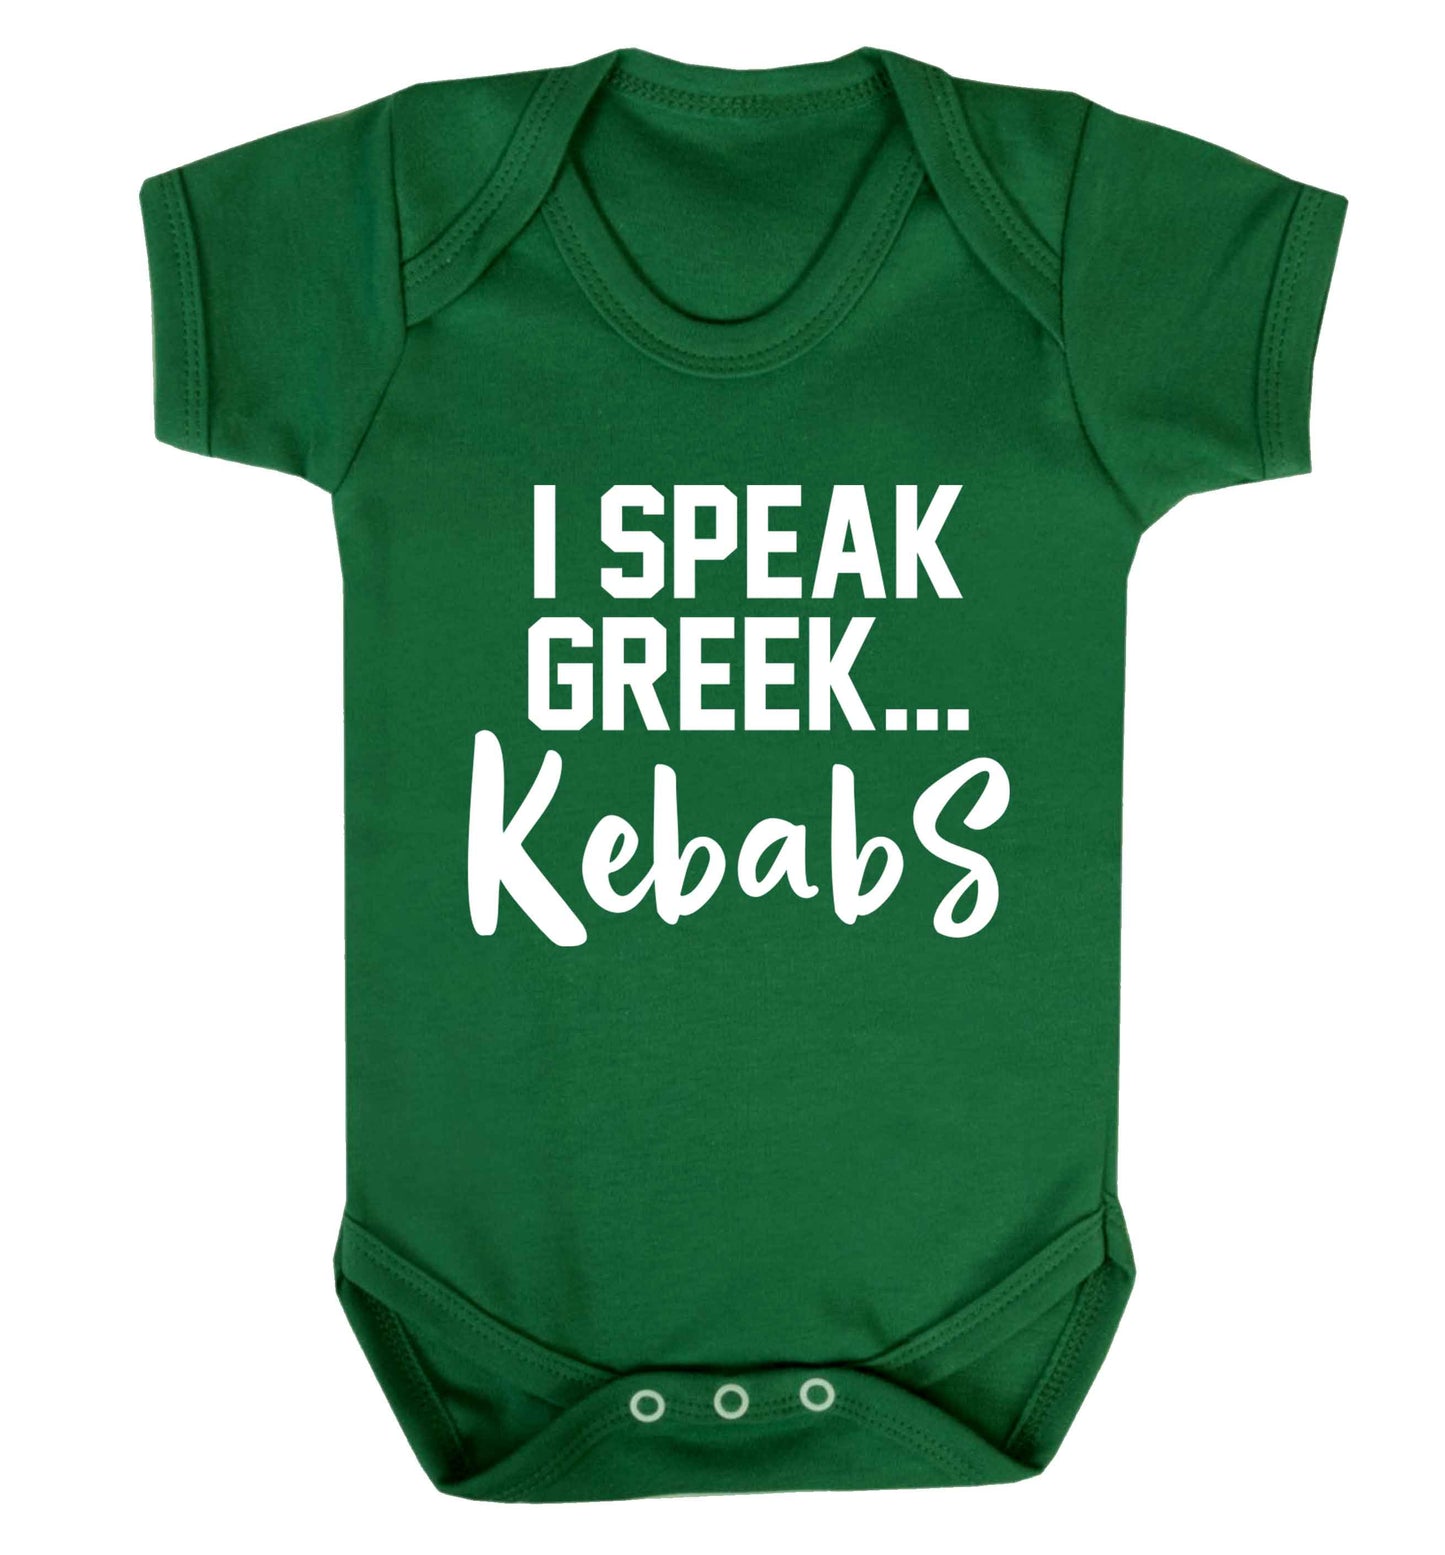 I speak Greek...kebabs Baby Vest green 18-24 months